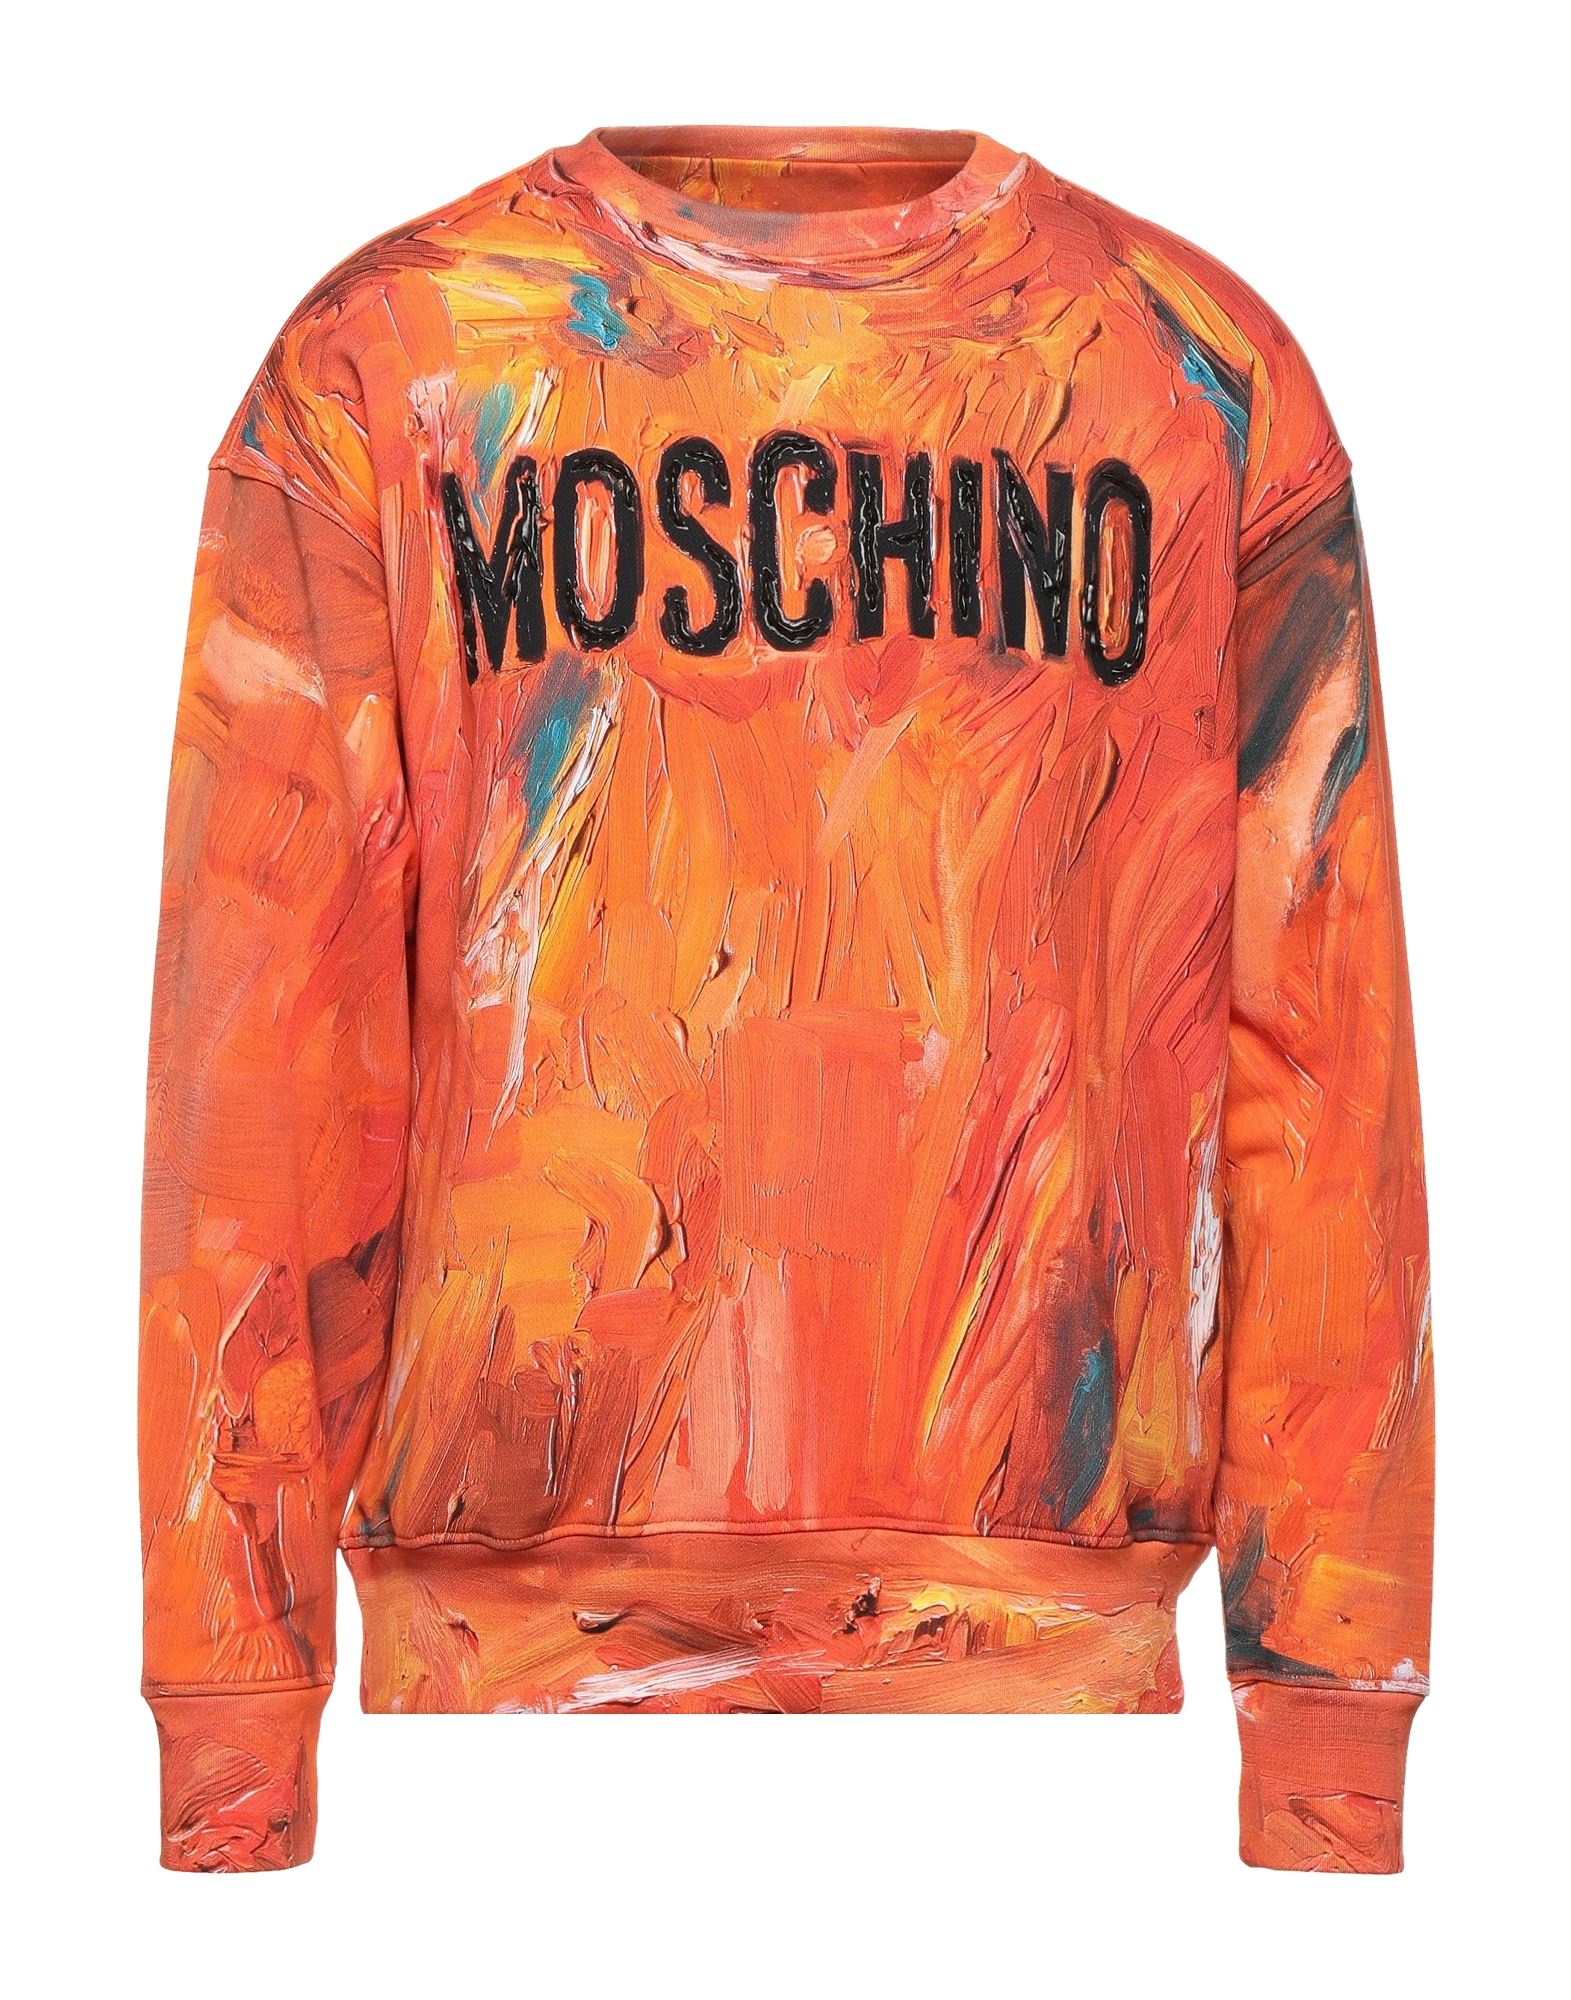 MOSCHINO Sweatshirt Herren Orange von MOSCHINO